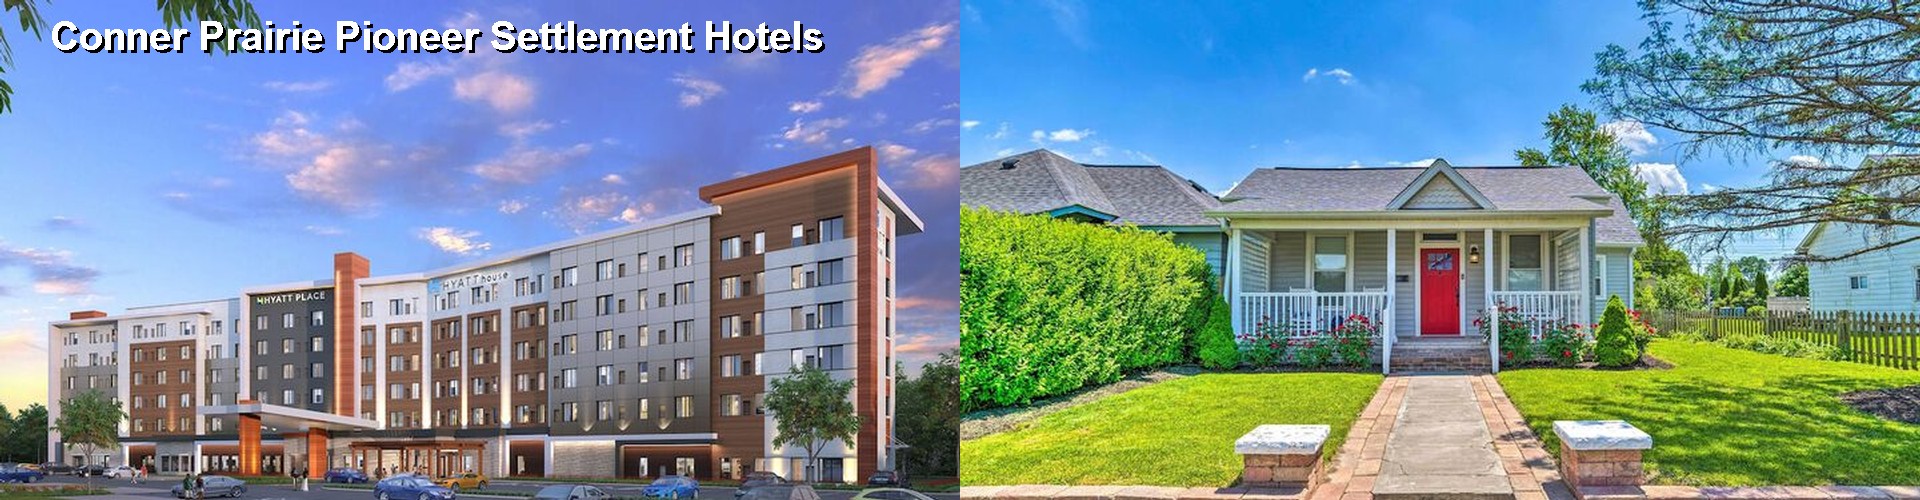 4 Best Hotels near Conner Prairie Pioneer Settlement